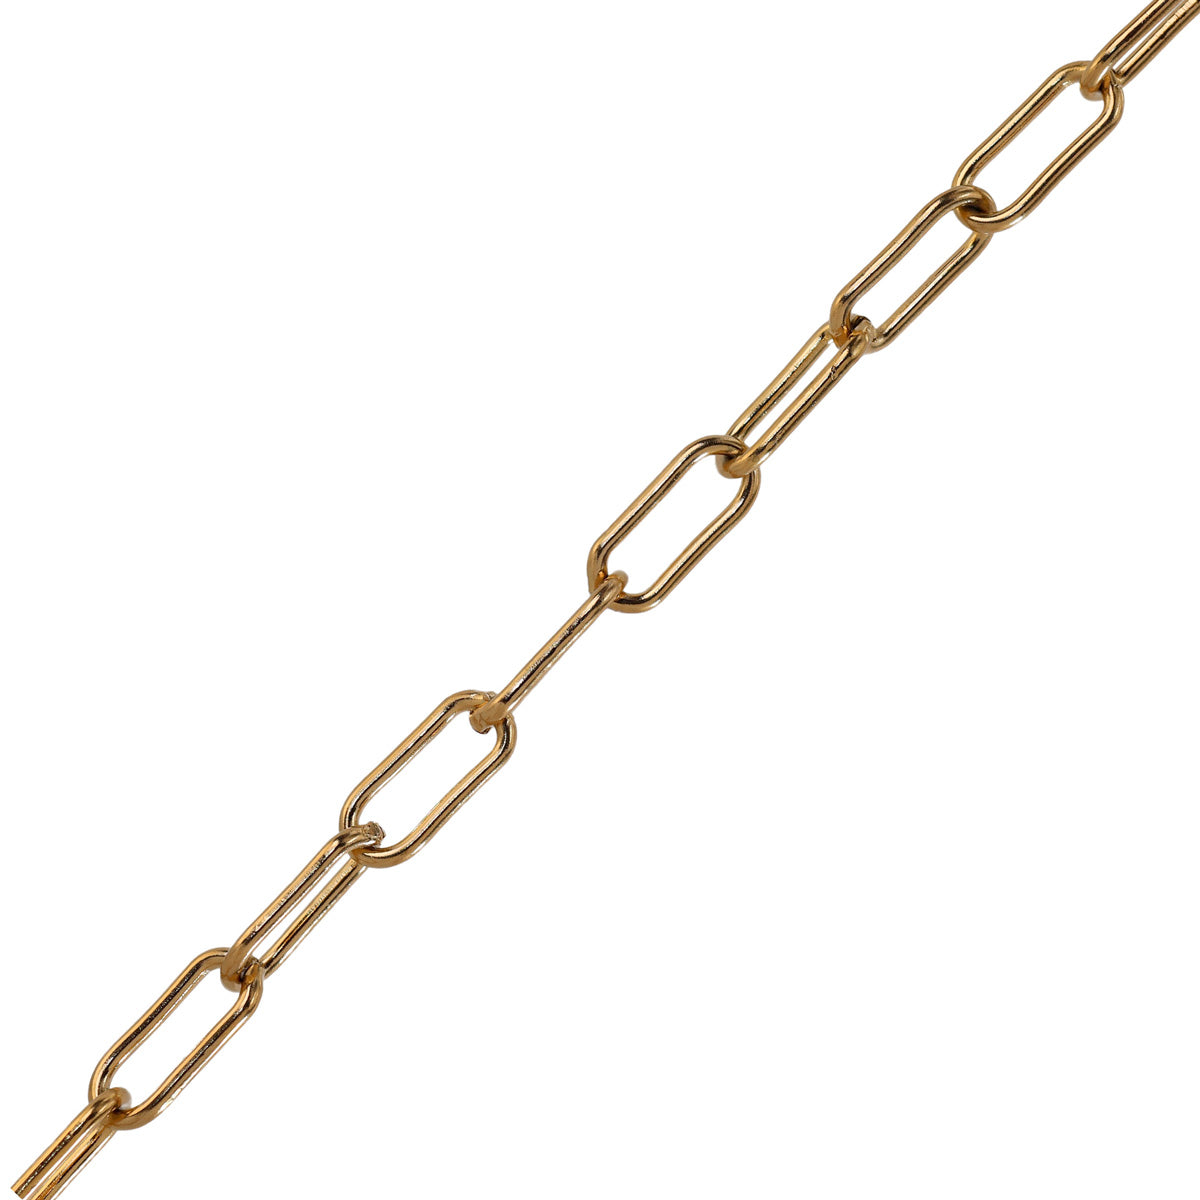 Cable chain necklace (steel) 42cm +5cm